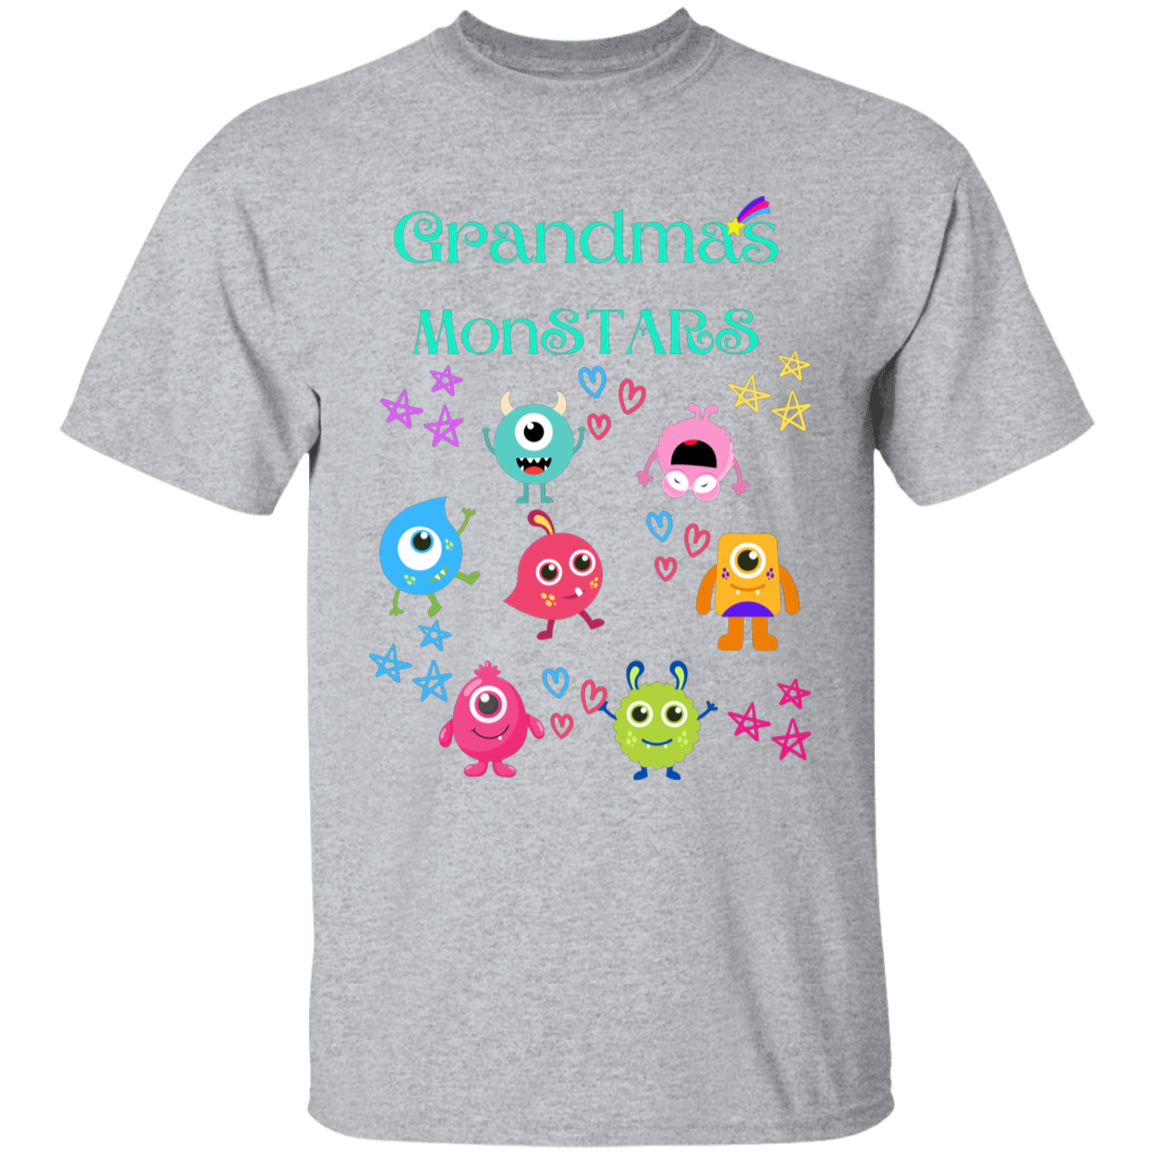 Grandma's MonSTARS Youth 100% Cotton T-Shirt